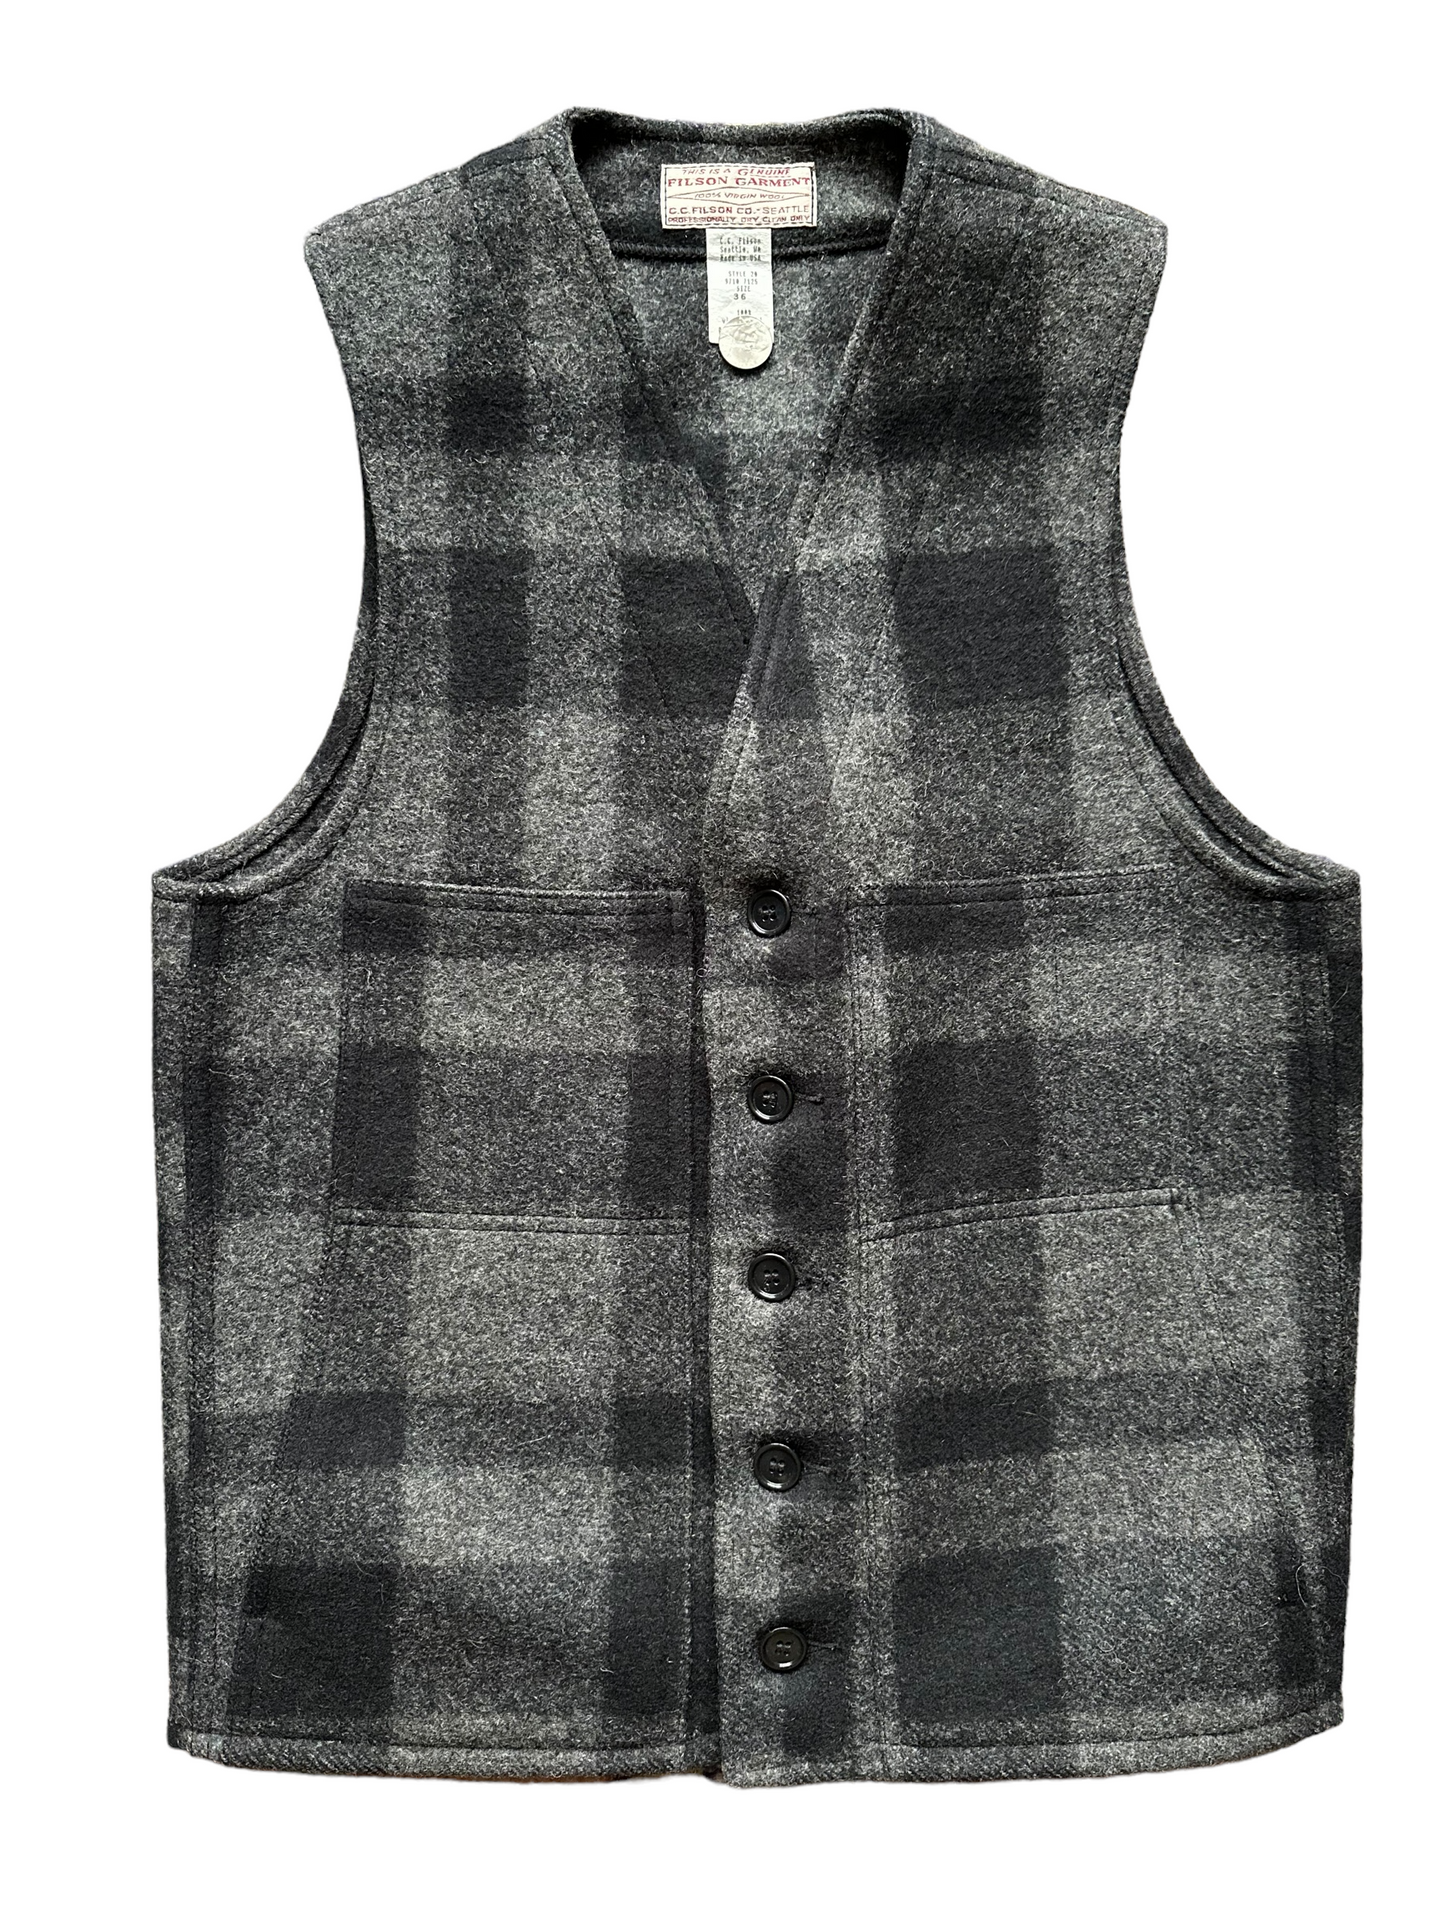 Front View of Vintage Filson Mackinaw Vest SZ 36 |  Charcoal & Black Mackinaw Wool | Filson Seattle Workwear